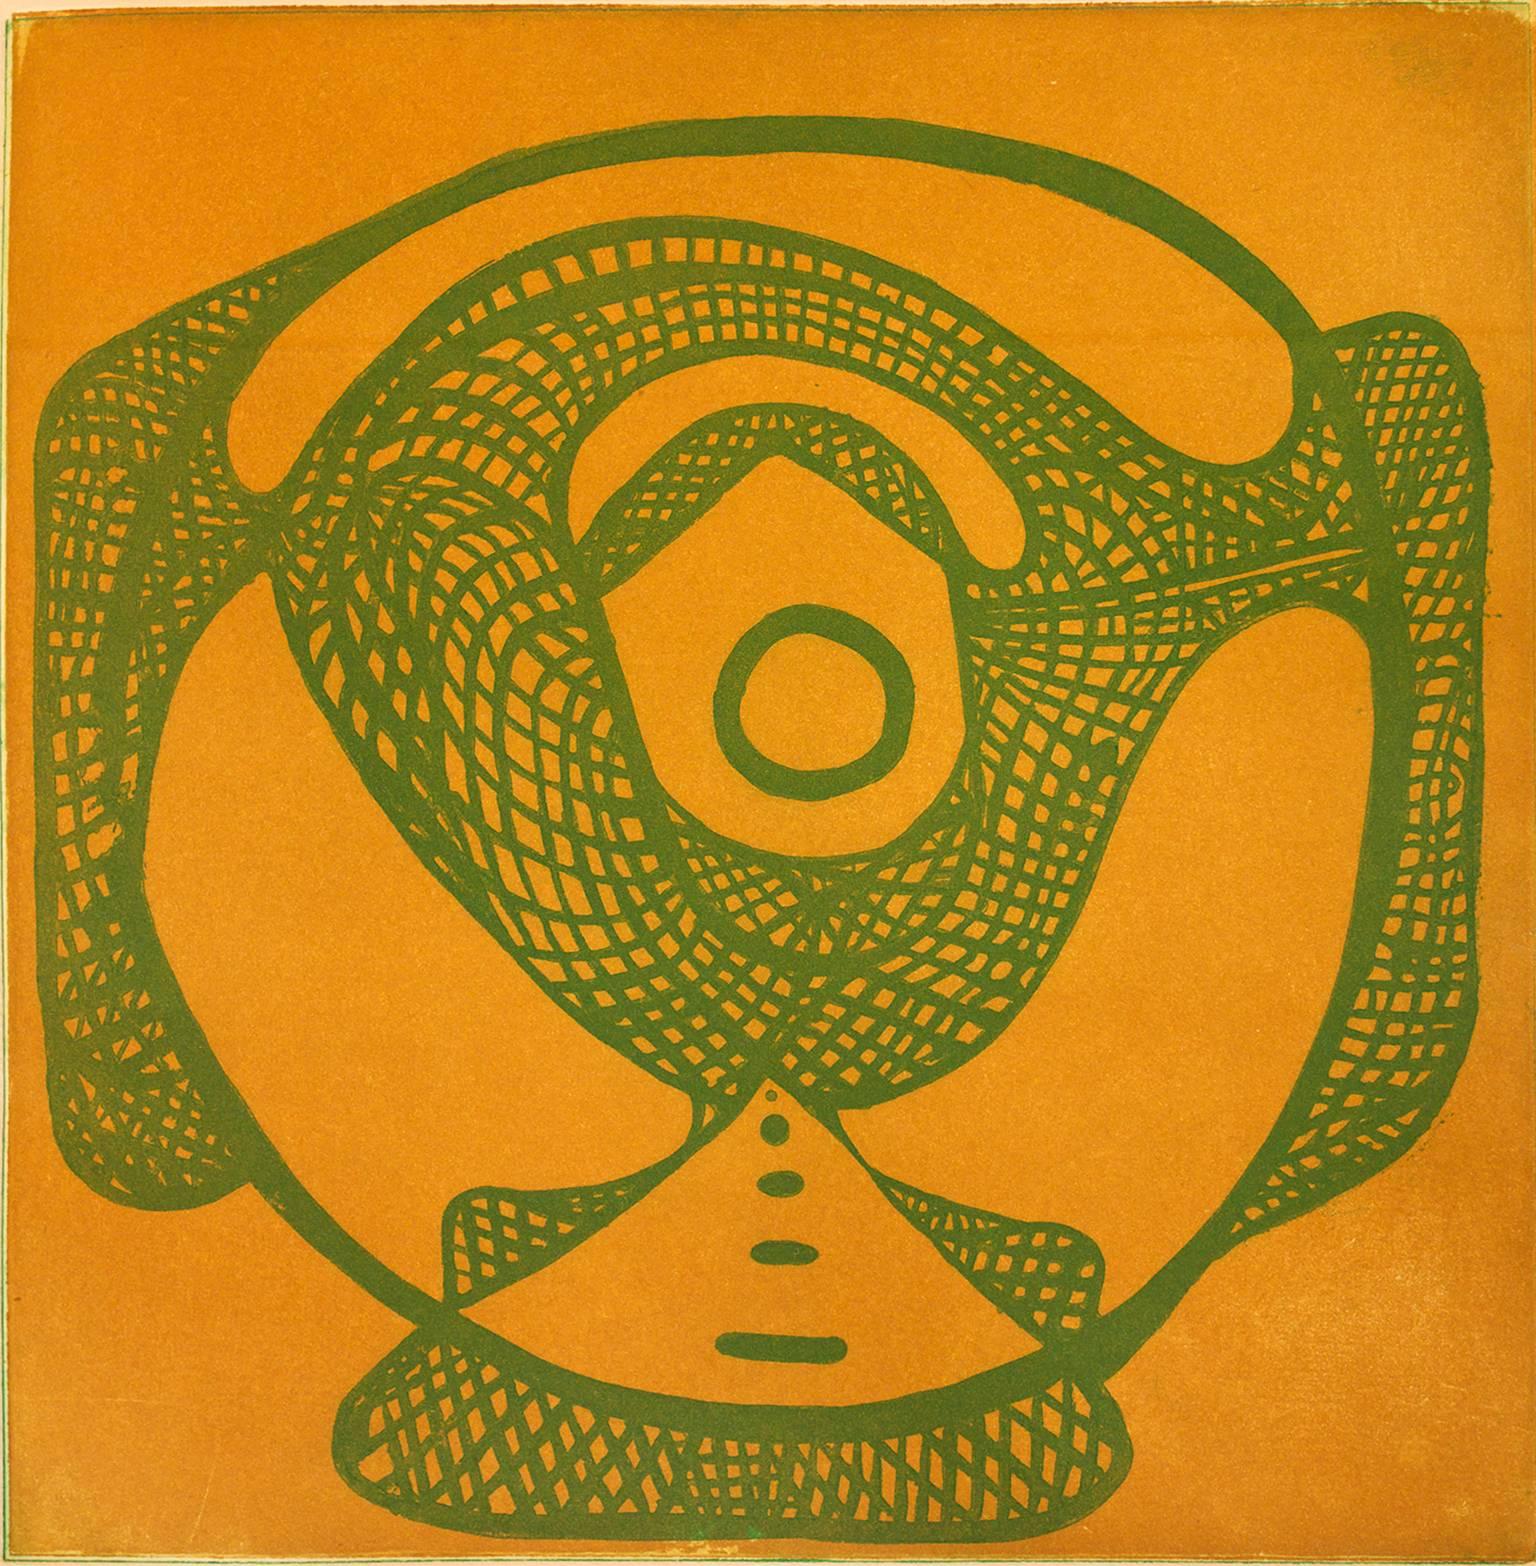 Sharon Horvath Abstract Print - Wheelhouse #2, abstract baseball inspired etching, aquatint print, ochre, green